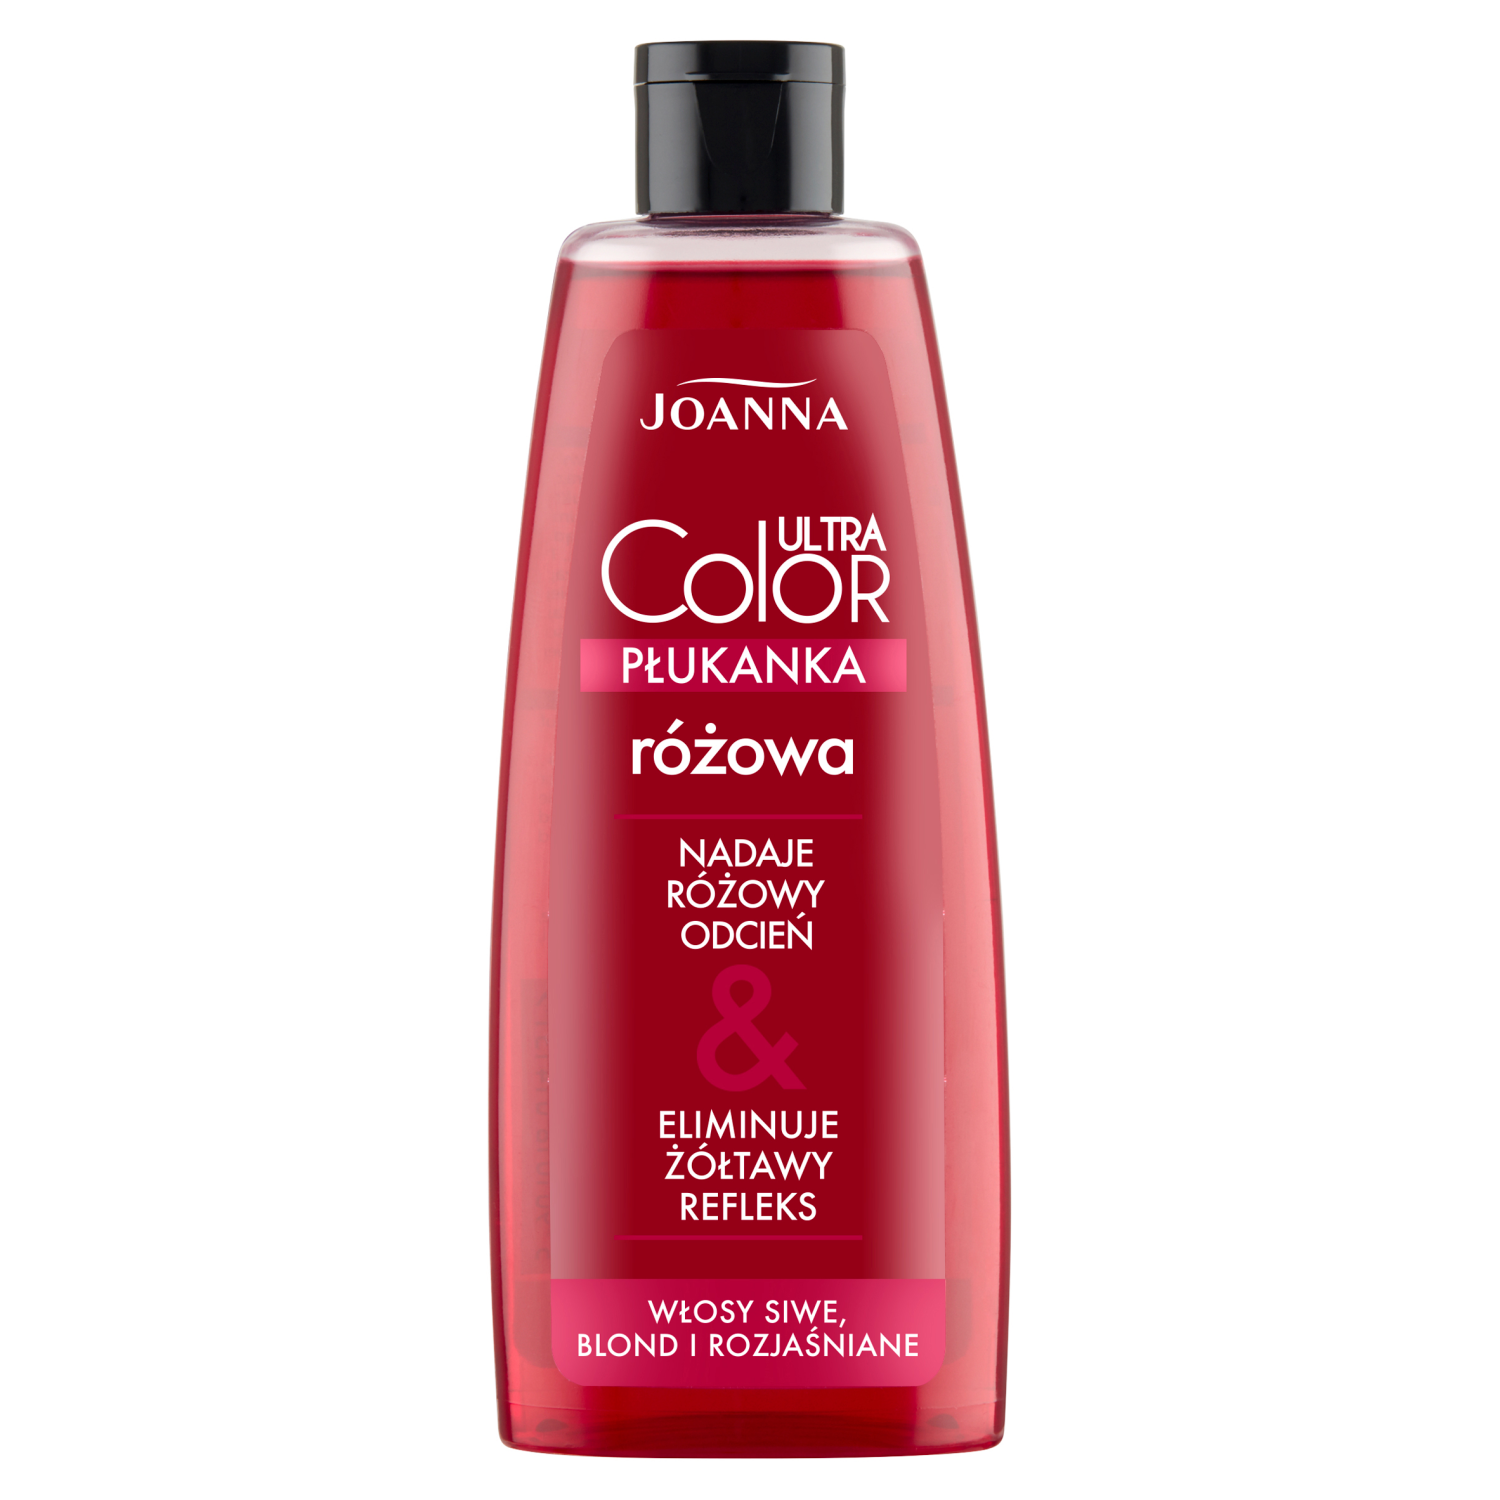 Joanna Ultra Color System płukanka do włosów różowa, 150 ml | hebe.pl